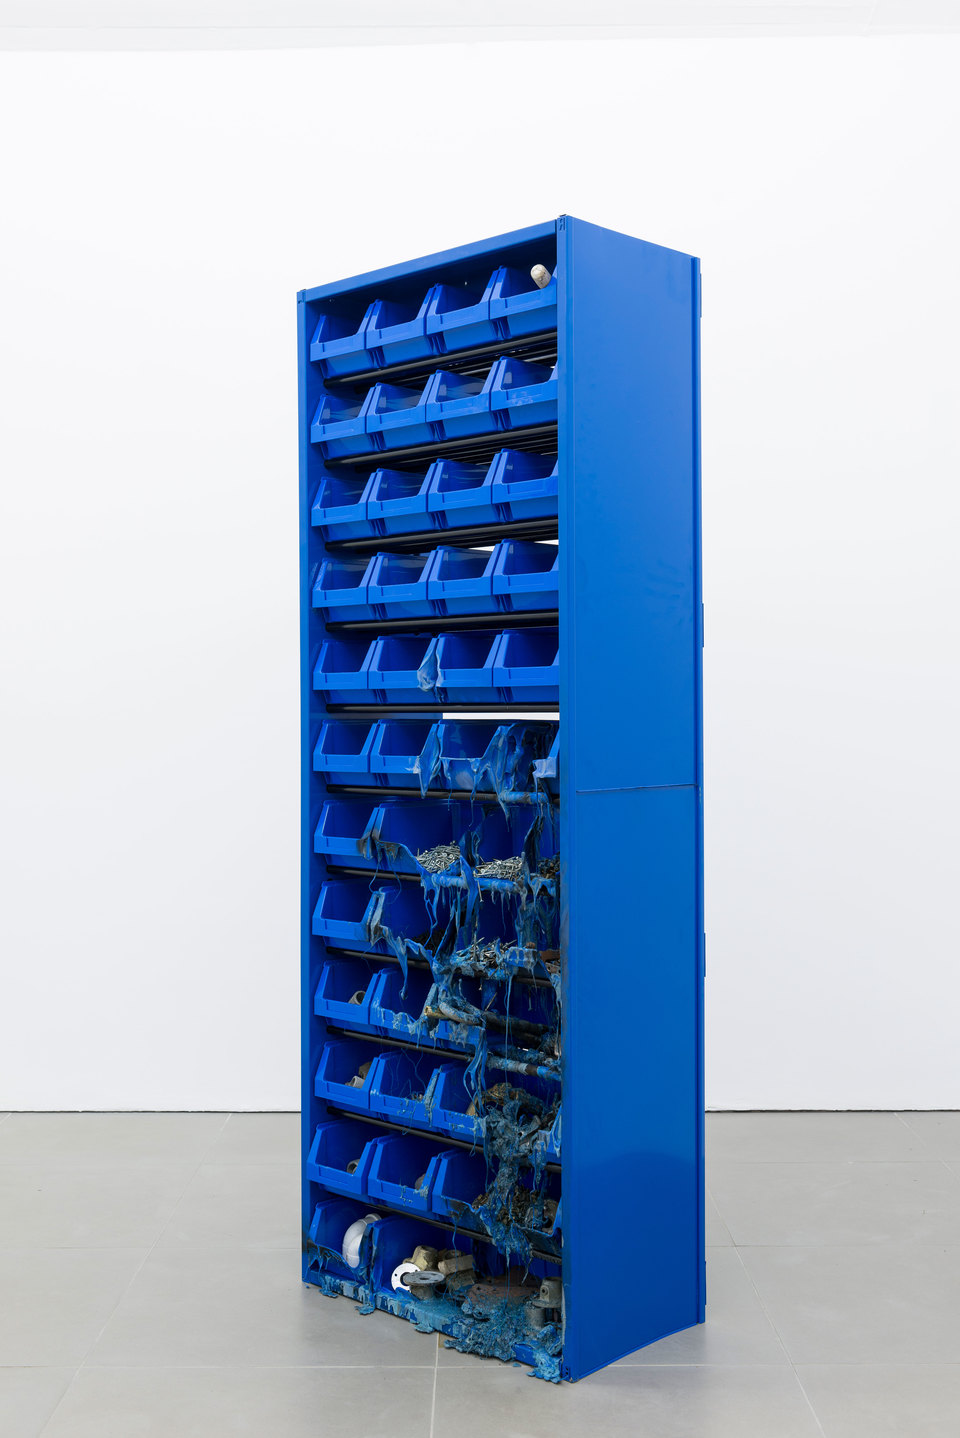 Matias Faldbakken, Parts Cabinet, 2013, metal cabinet, plastic bins, screws, bolts miscellaneous, 200 x 70.5 x 37cm, Cell Project Space